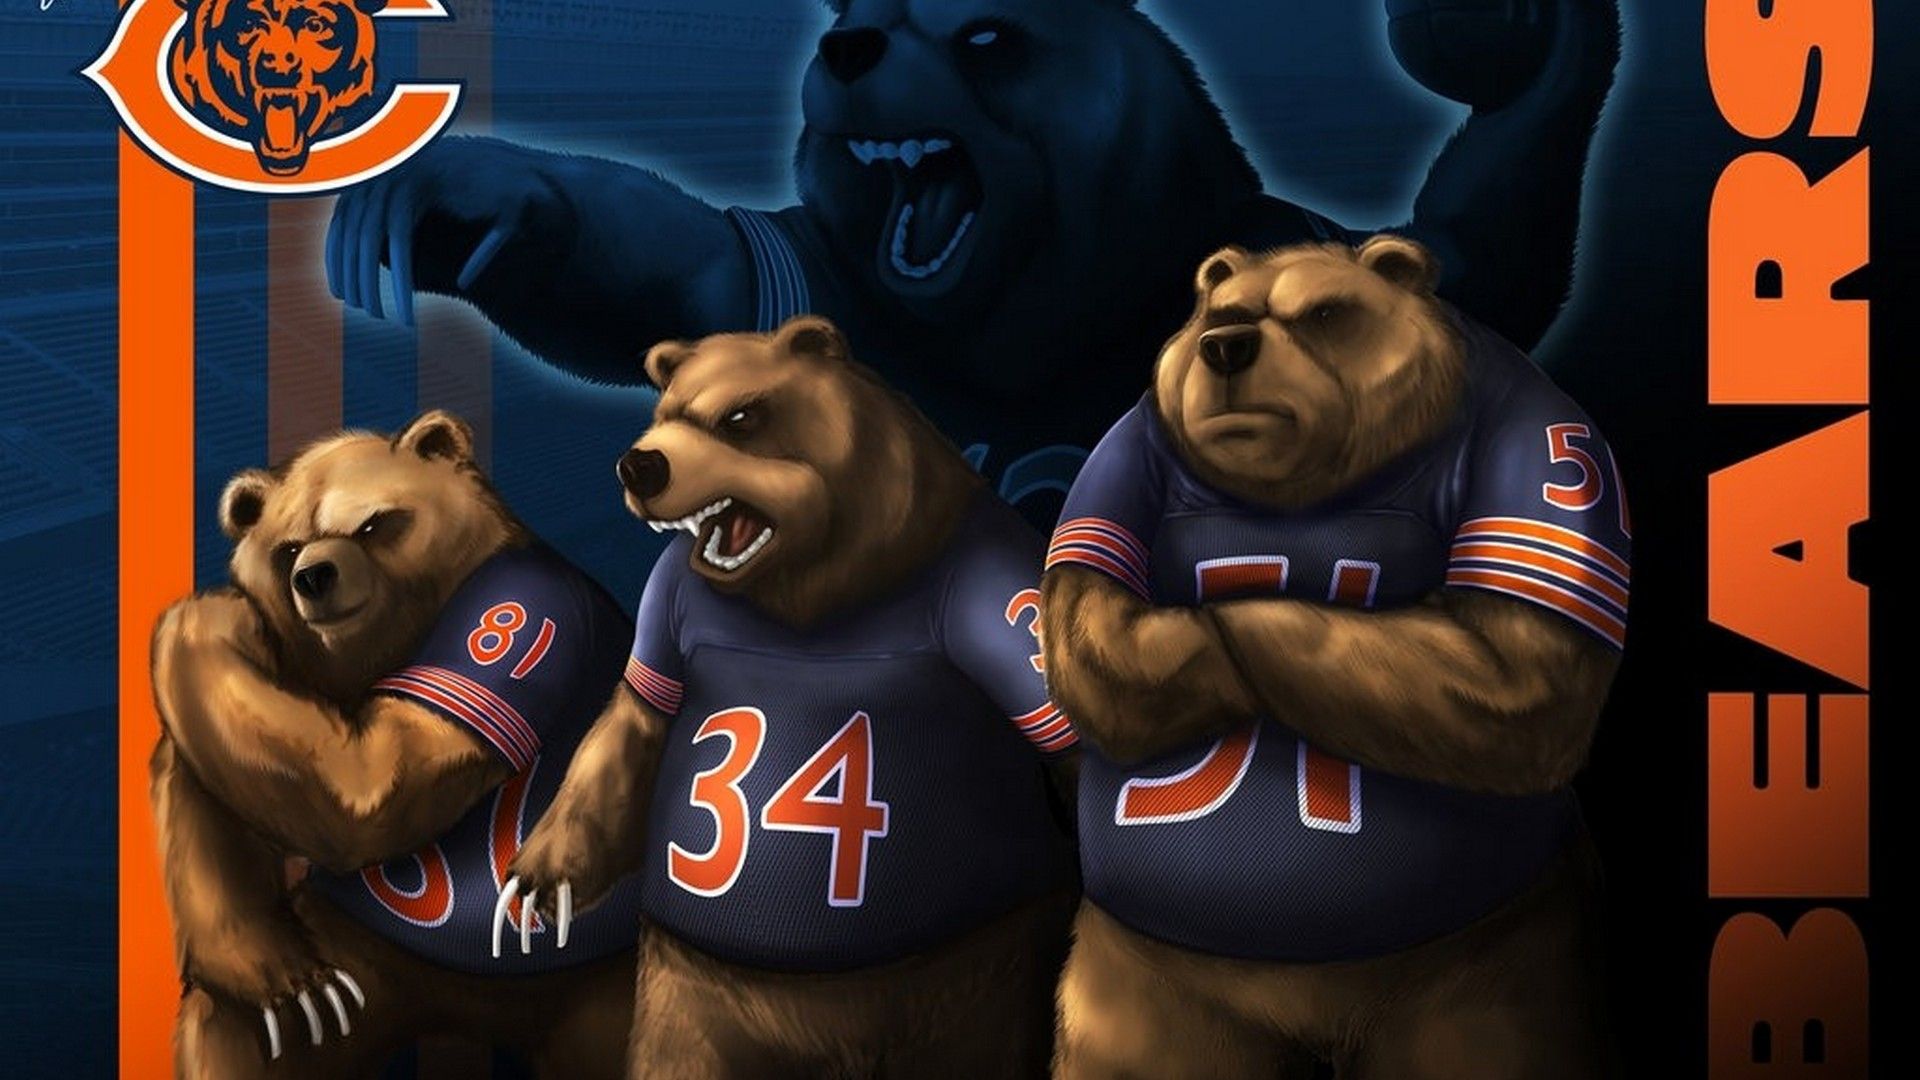 HD Background Chicago Bears NFL Football Wallpaper. Chicago bears wallpaper, Chicago bears picture, Chicago bears logo